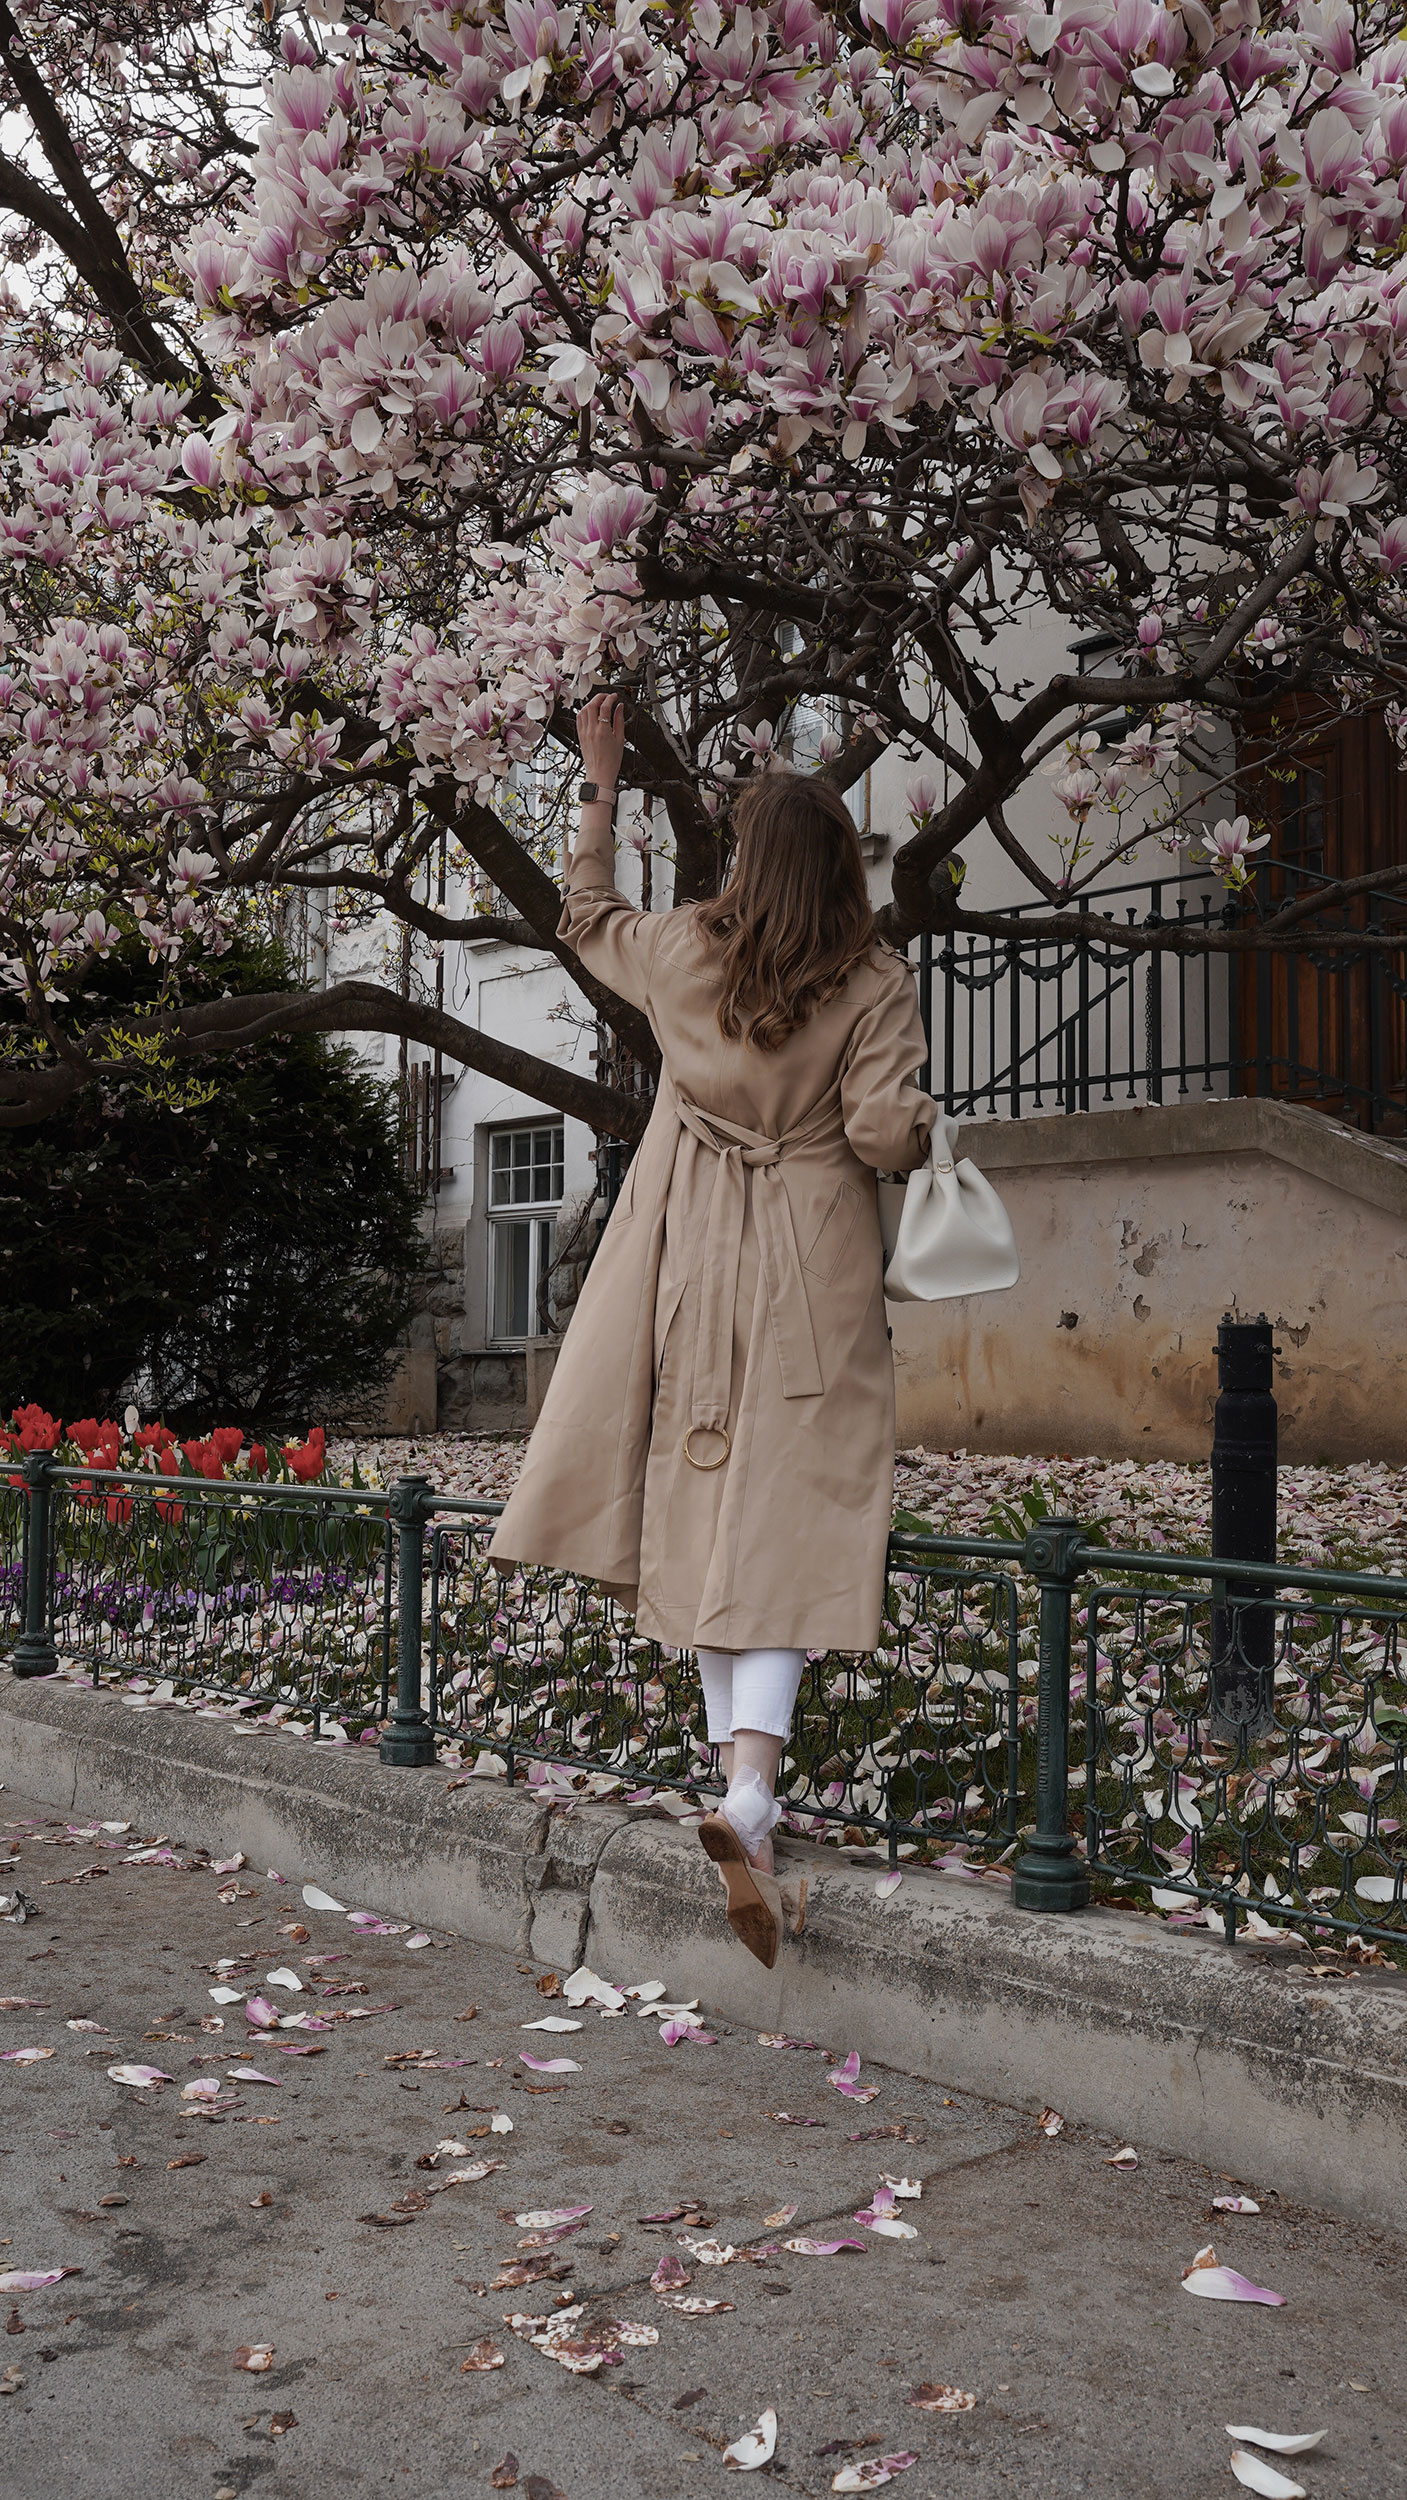 Trenchcoat Outfit, Spring, Wien, Magnolienbaum, Magnolia tree, polene bag